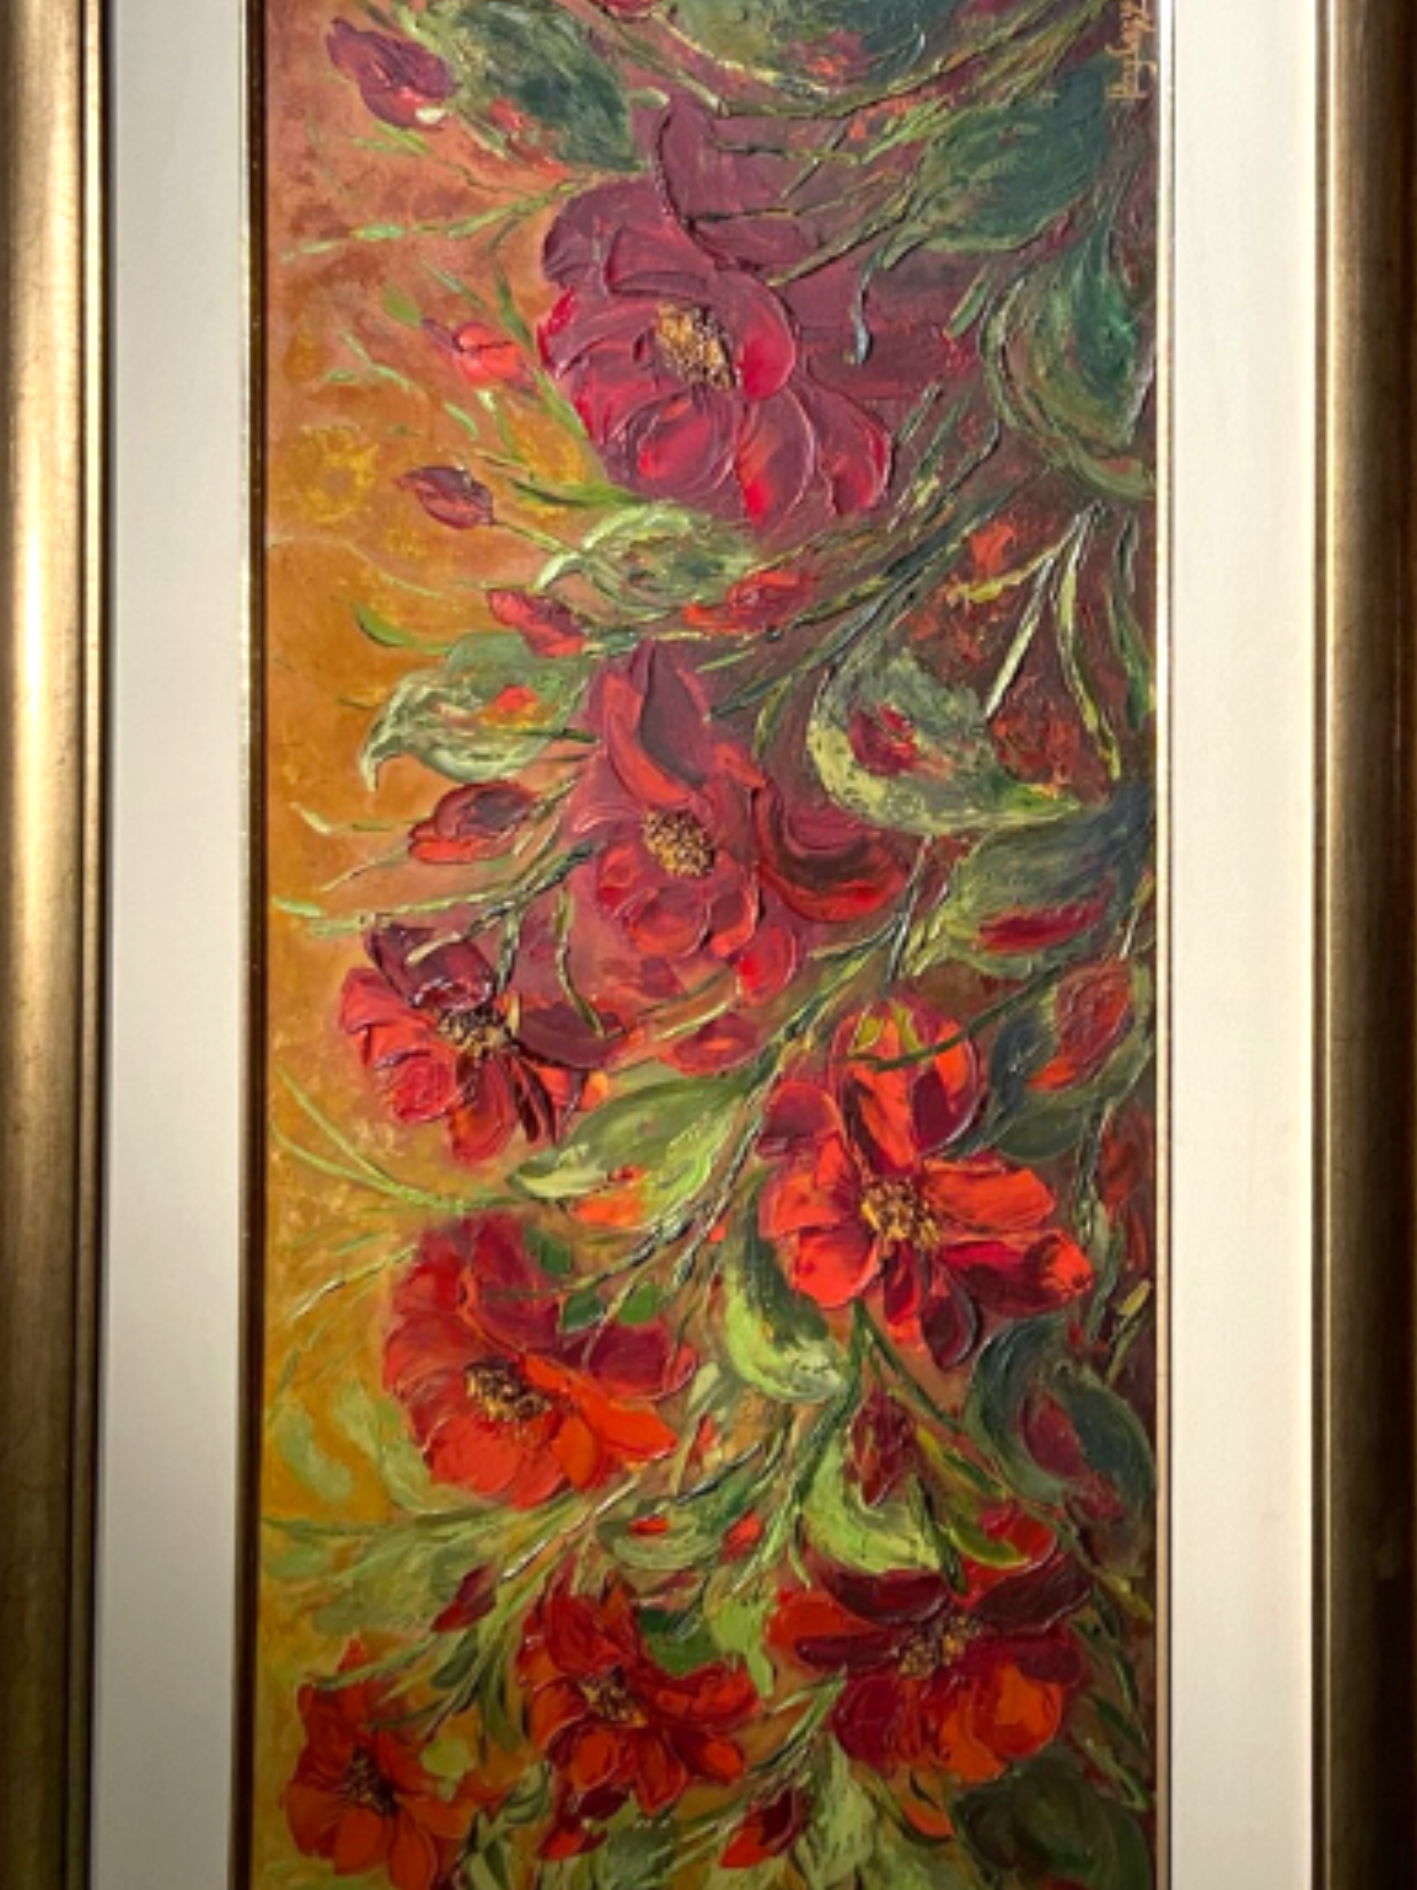 Obra "Flores" de Any Cazzola 94.5 x 43.5 cm.